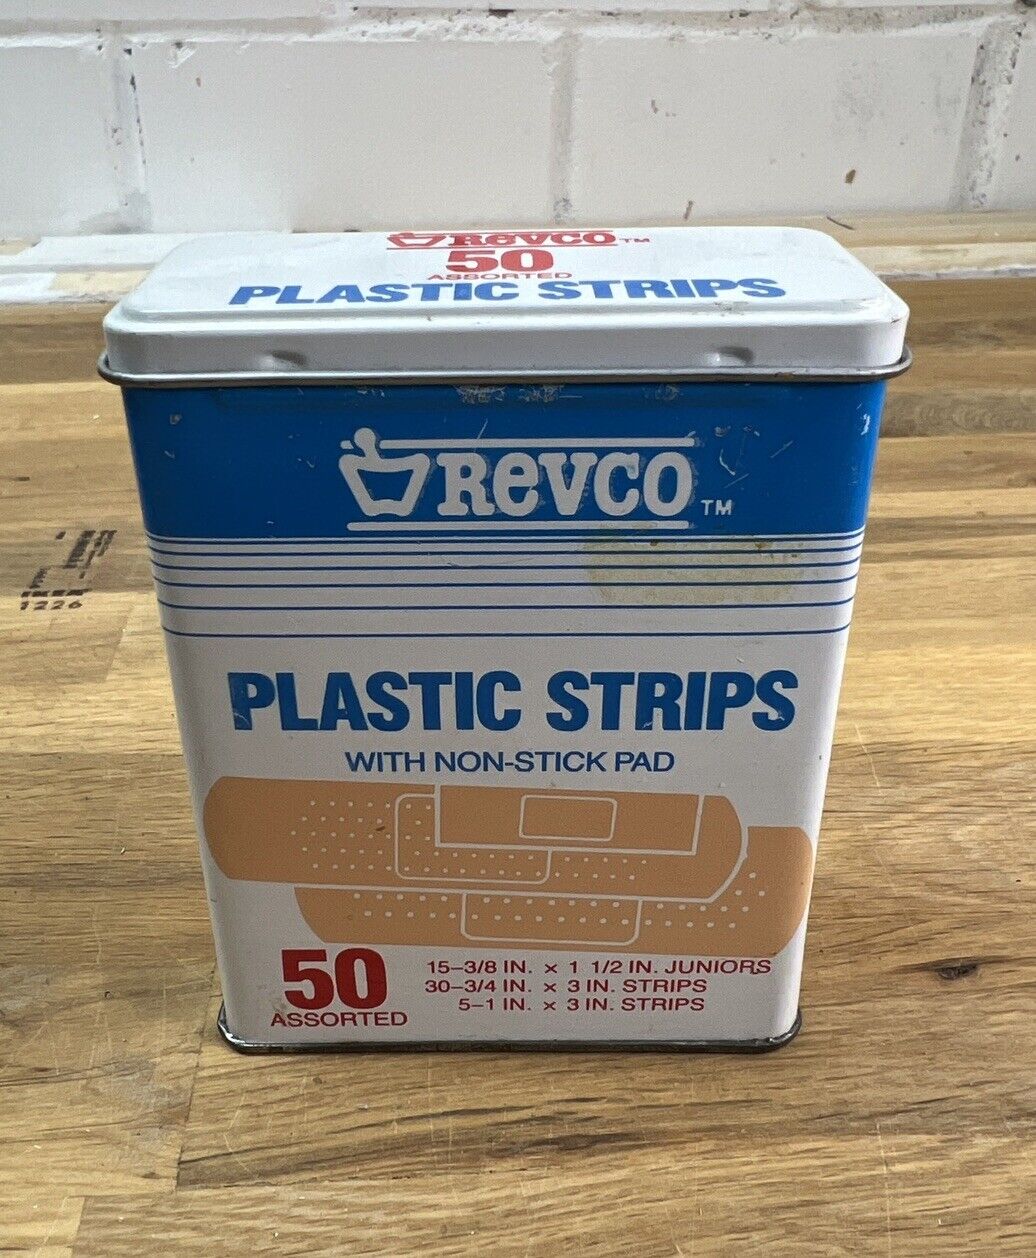 Vintage Revco Drug Stores Metal Bandage Tin Container (empty)